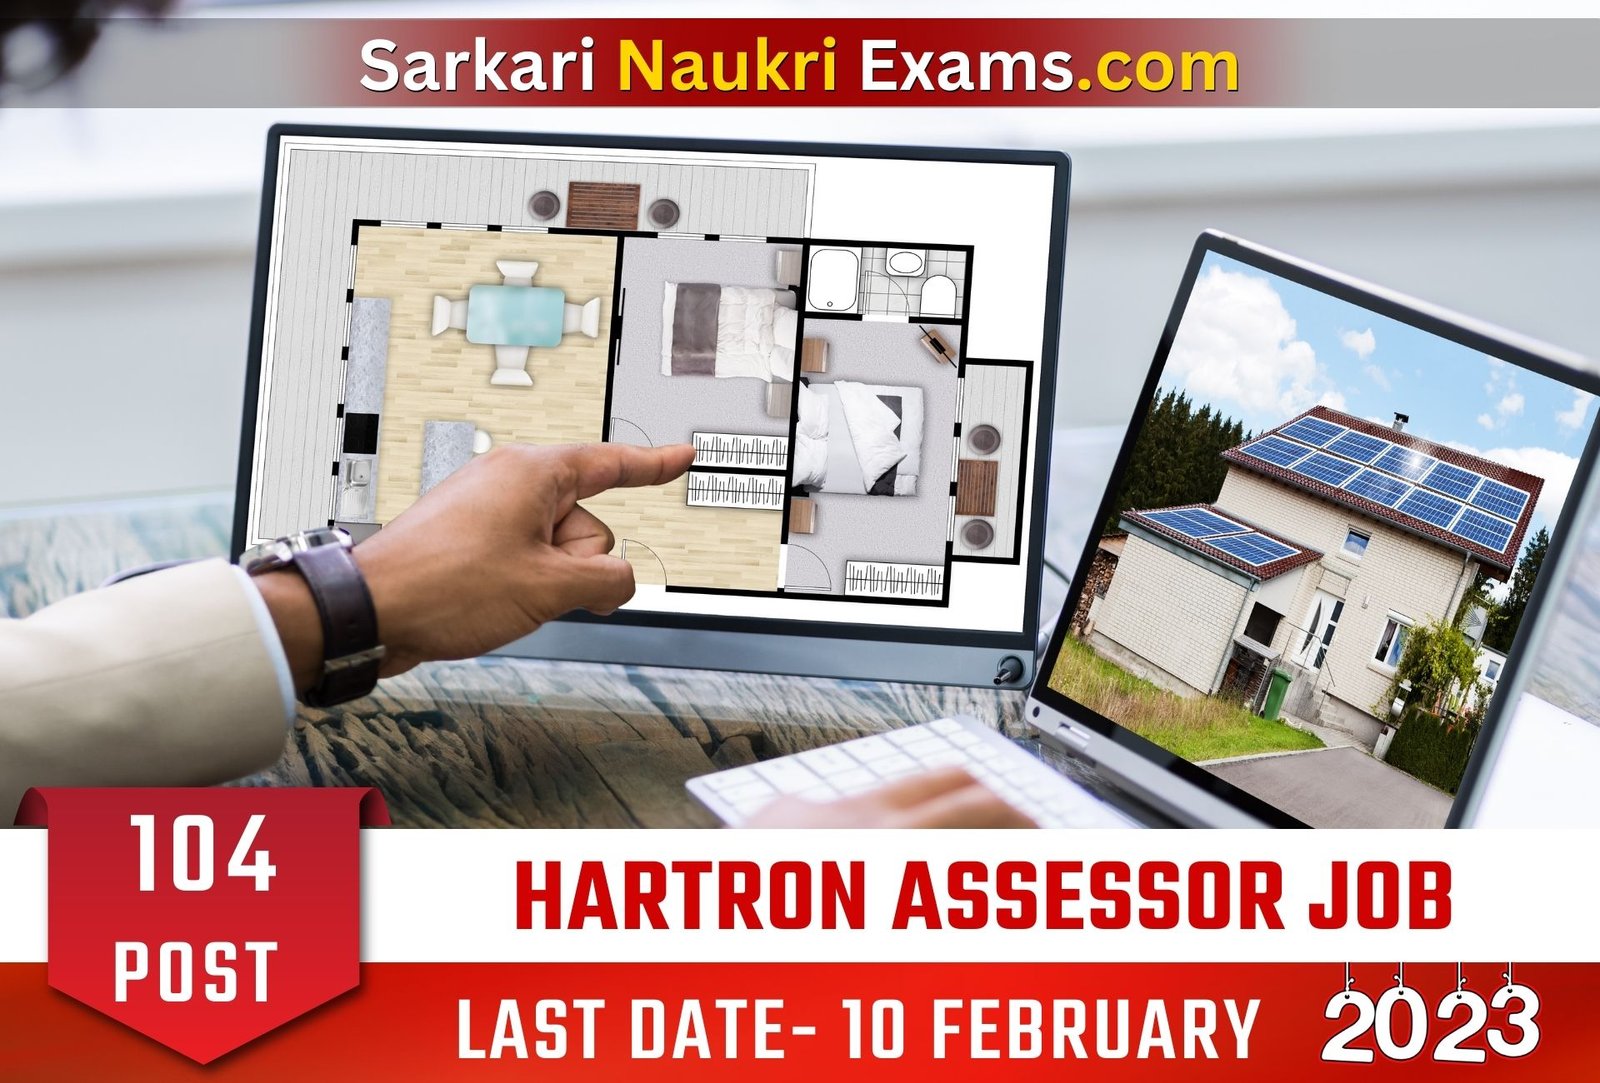 HARTRON Assessor Recruitment Form 2023 | Last Date 10 February